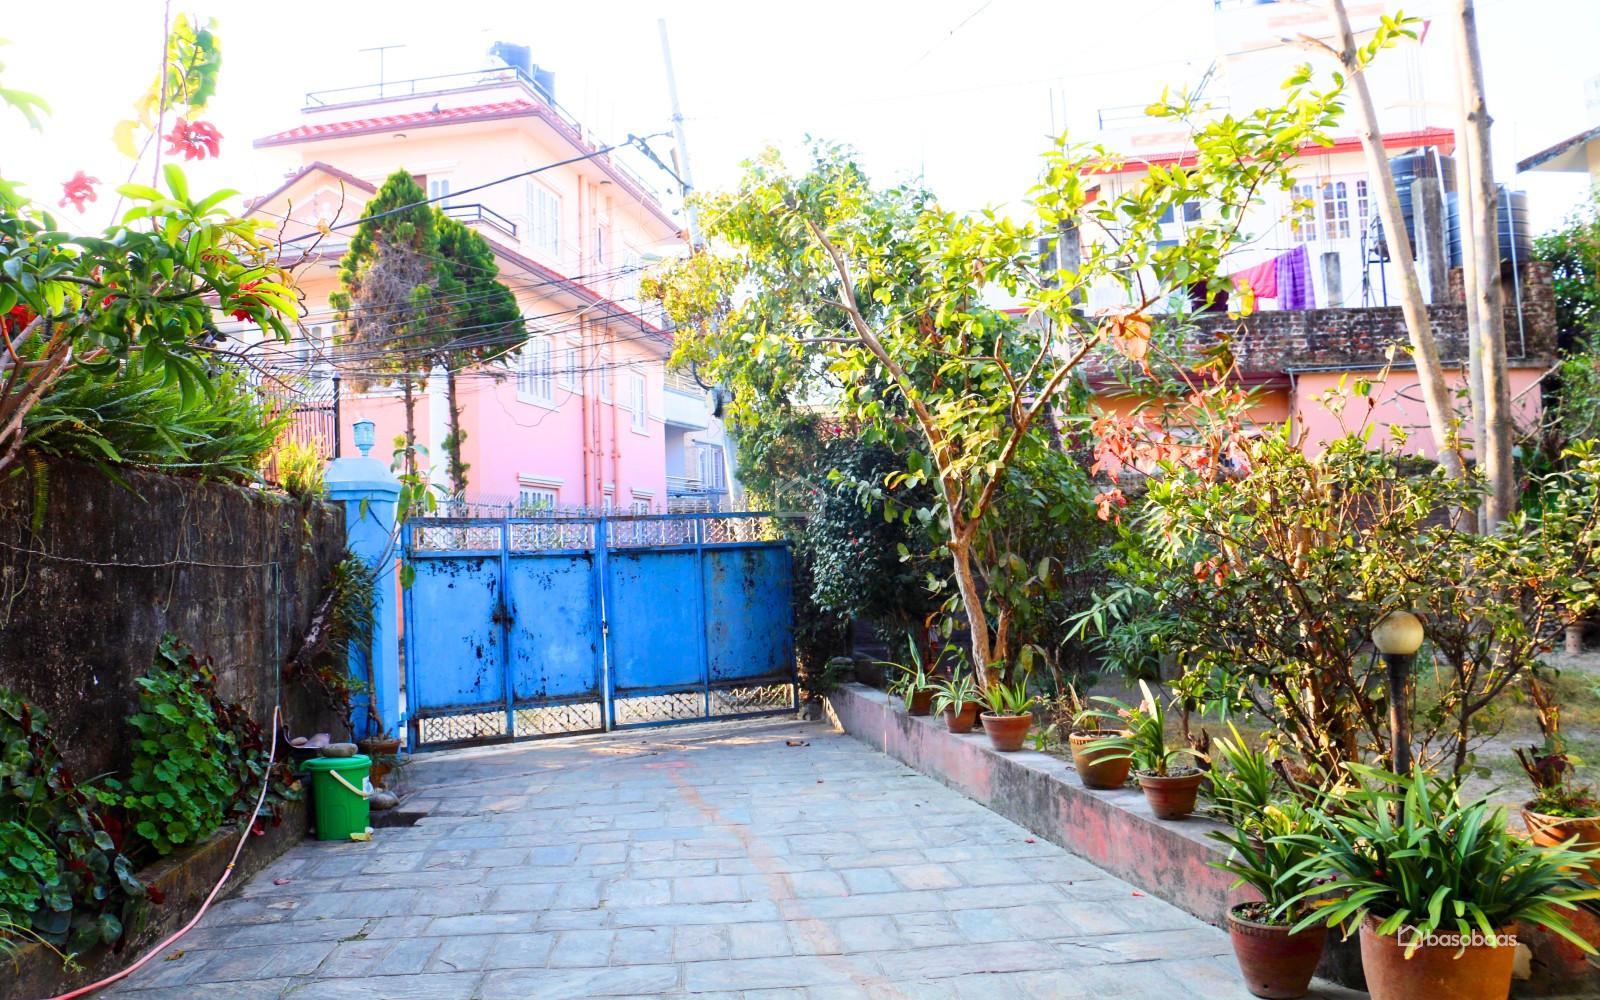 Residential Land : Land for Sale in Hattigauda, Kathmandu Image 3